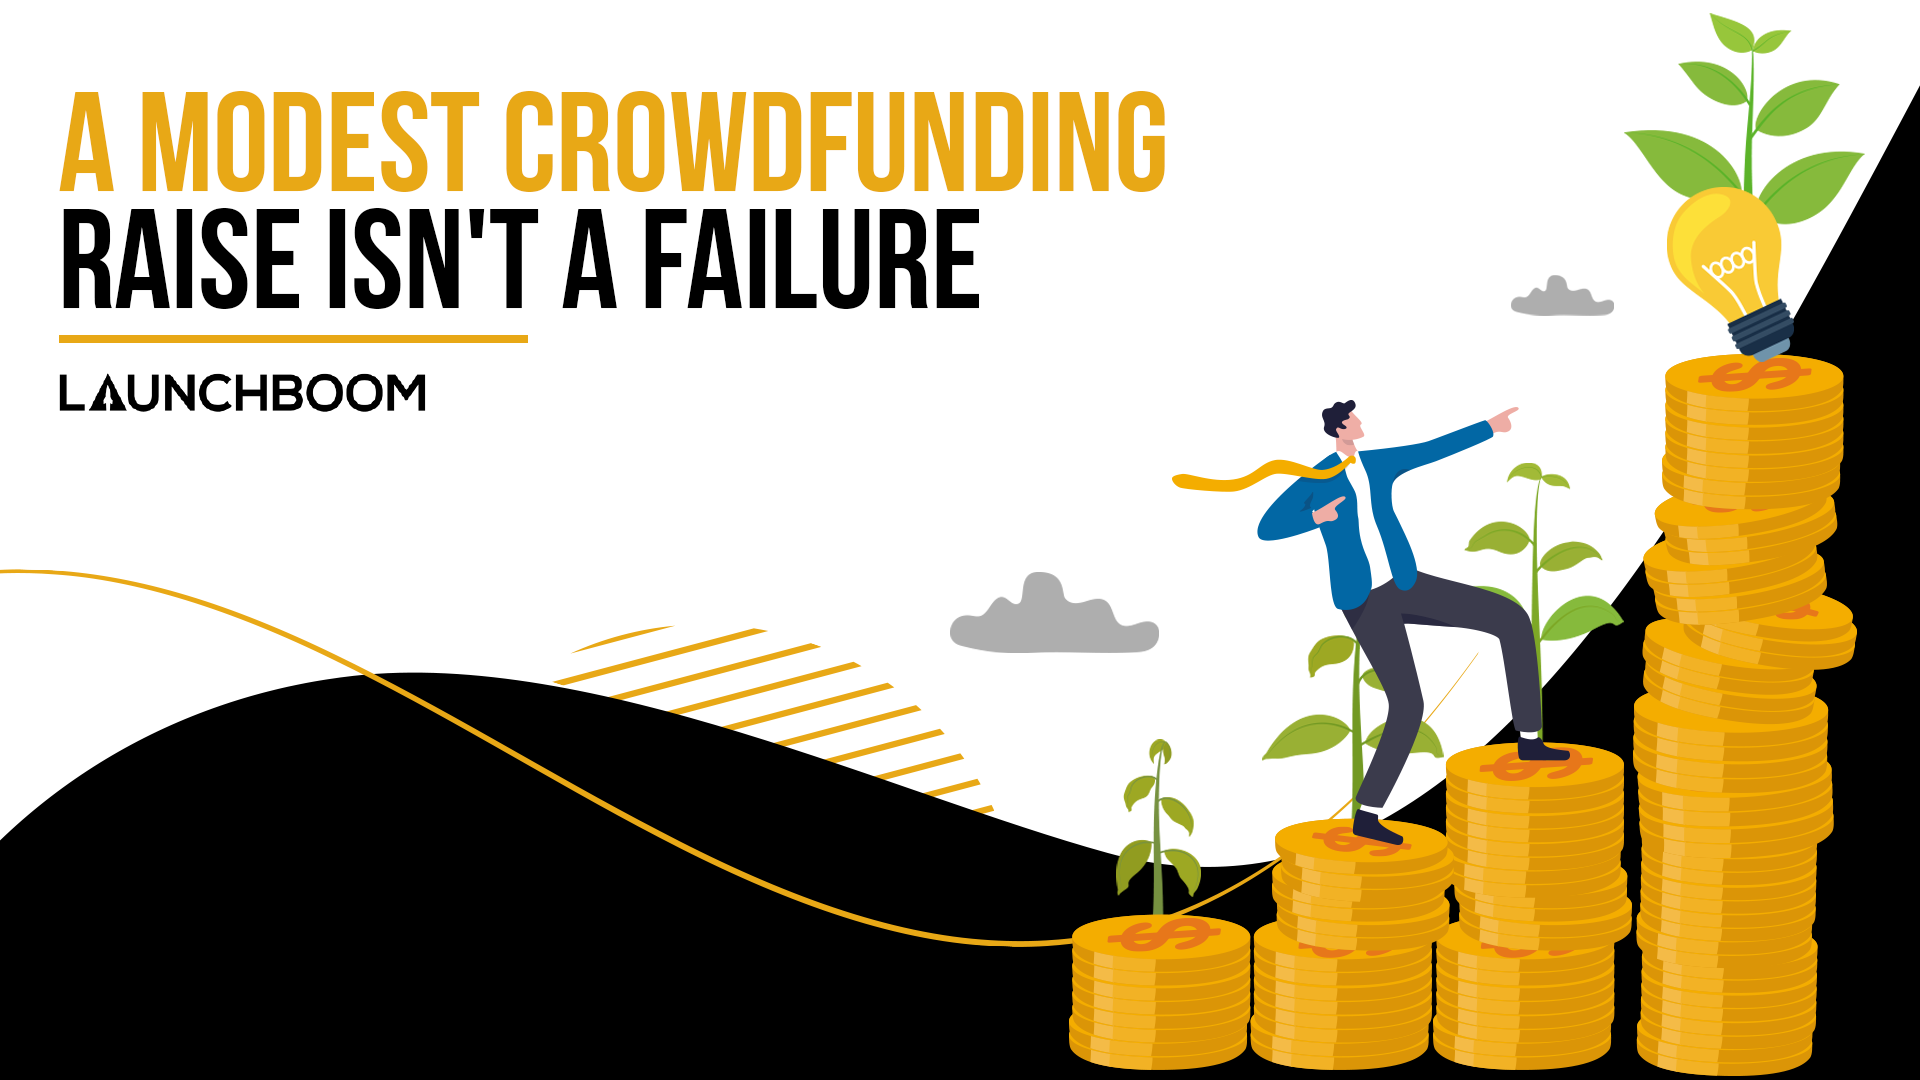 A modest crowdfunding raise isn’t a failure